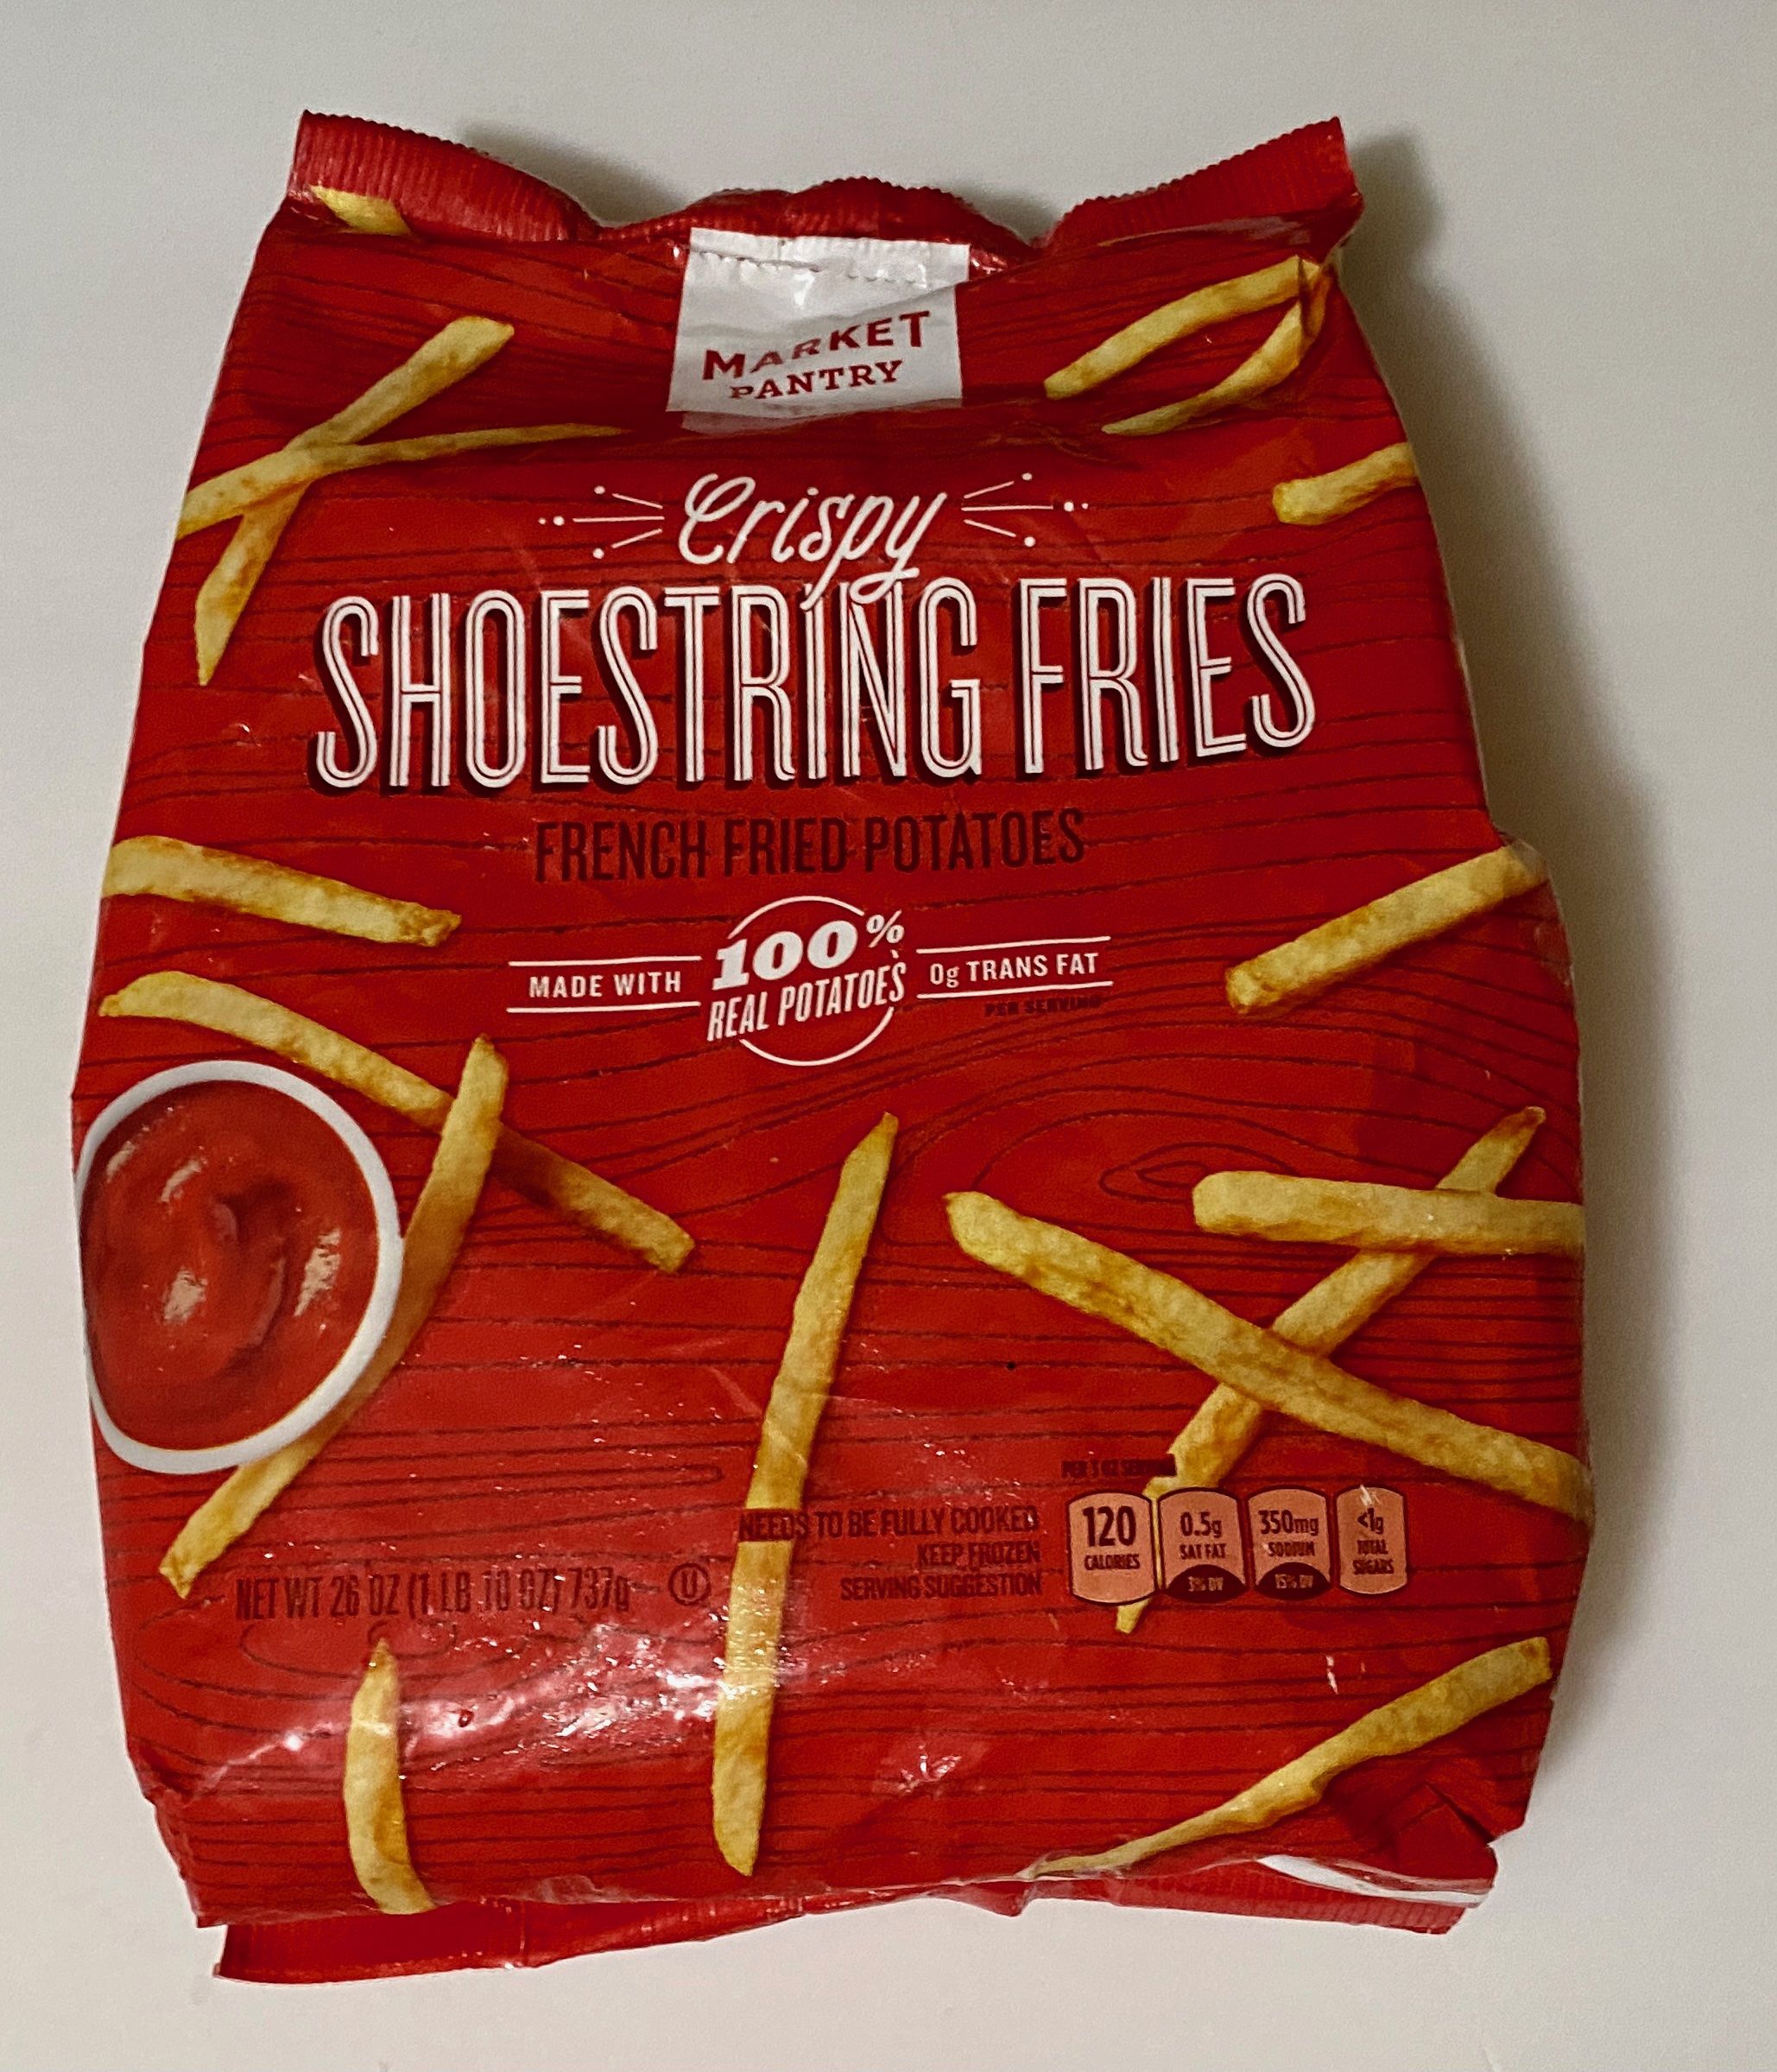 Air Fryer Frozen Shoestring Fries (So Crispy!!!)